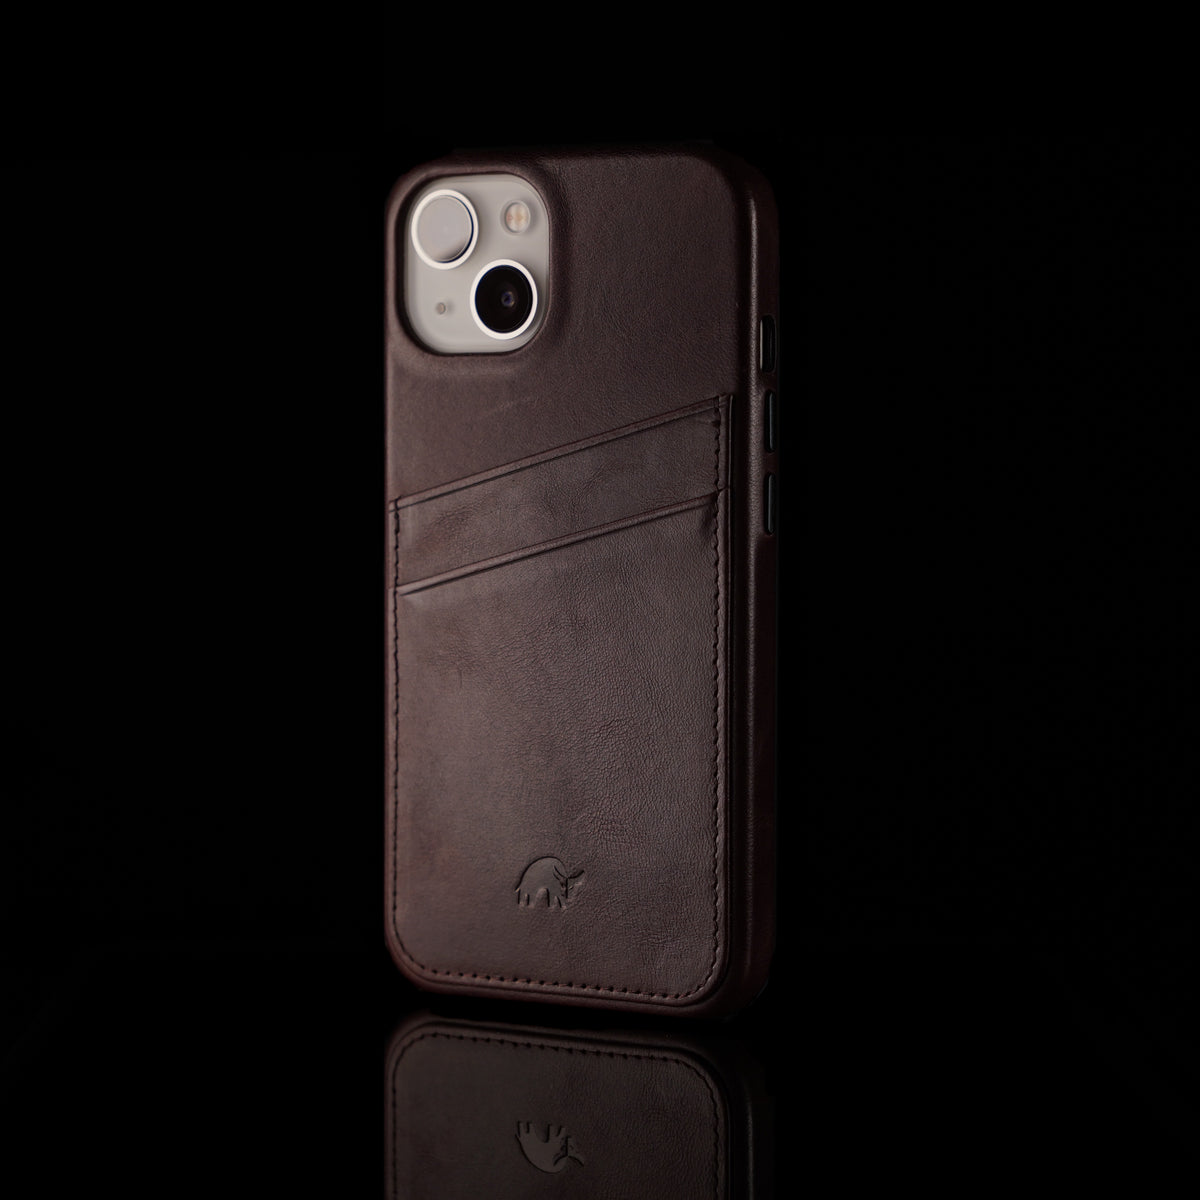 LOUIS VUITTON LV BAG ICON LOGO iPhone 15 Pro Max Case Cover